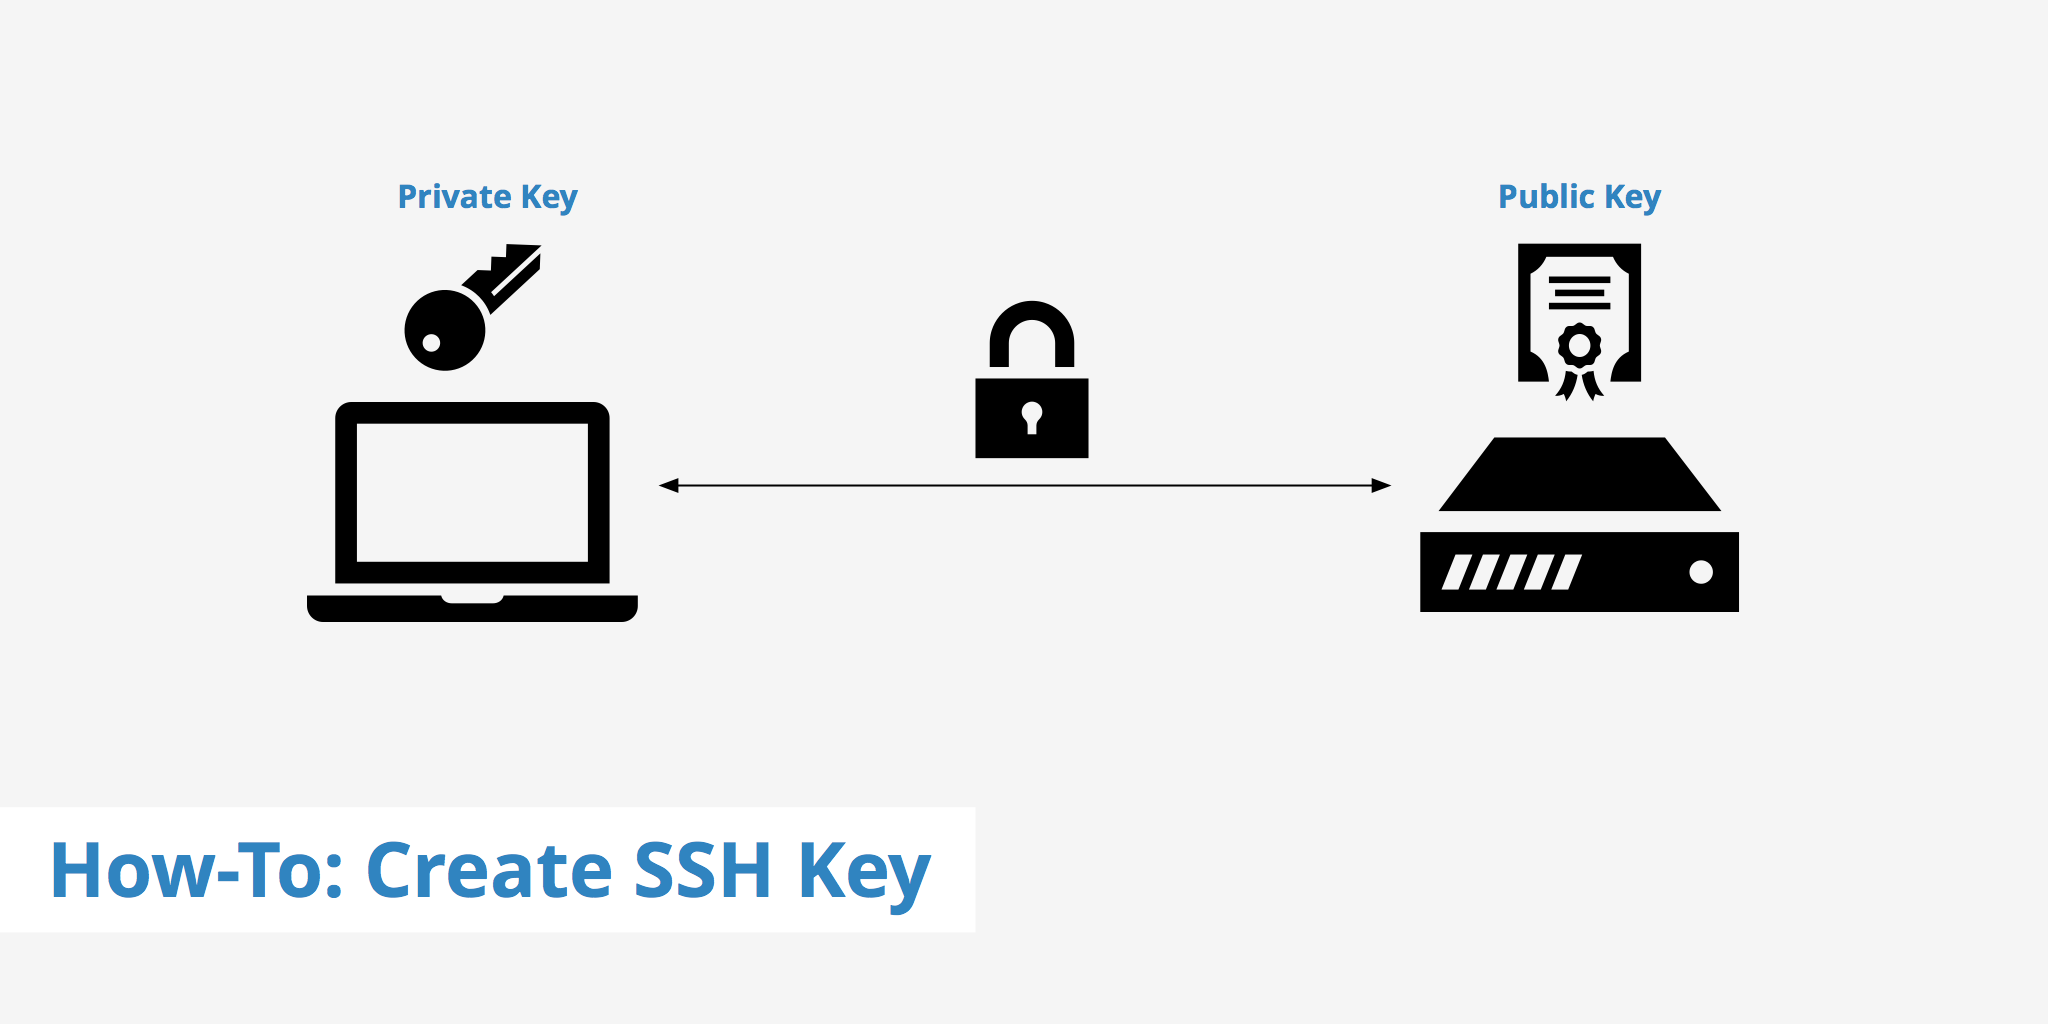 How to Create an SSH Key